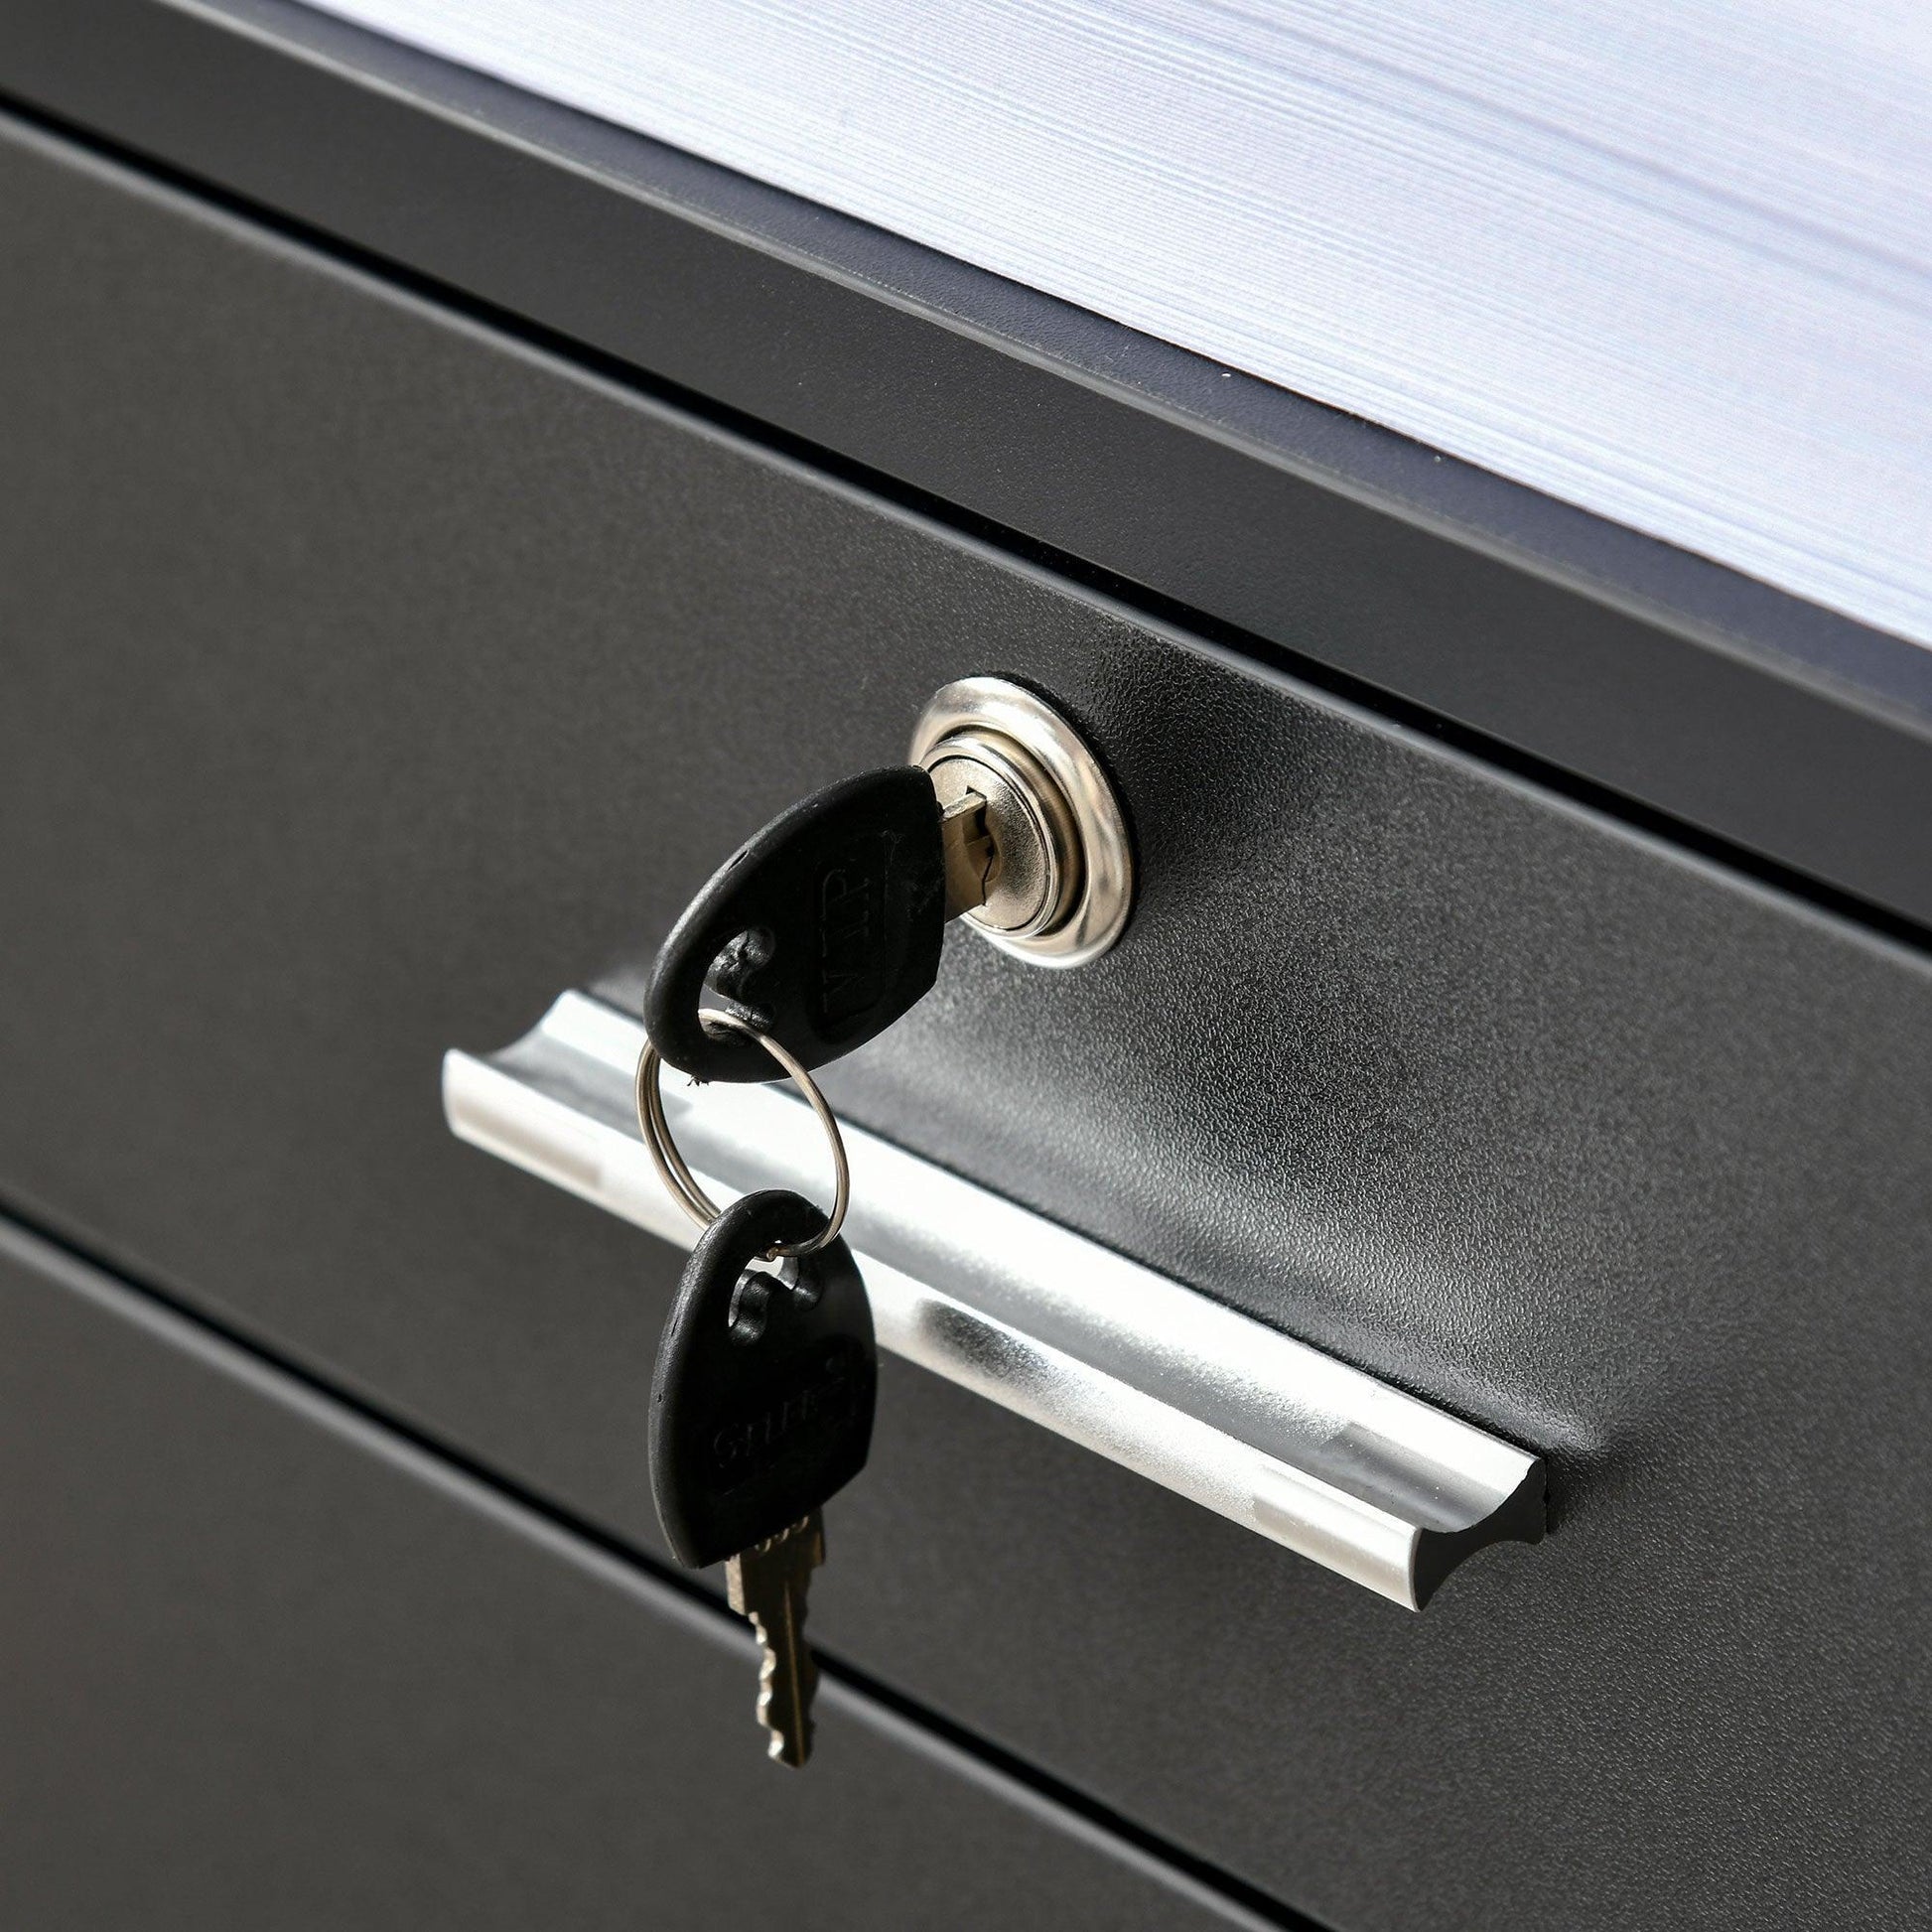 Vinsetto Lockable Mobile File Cabinet - Black - ALL4U RETAILER LTD